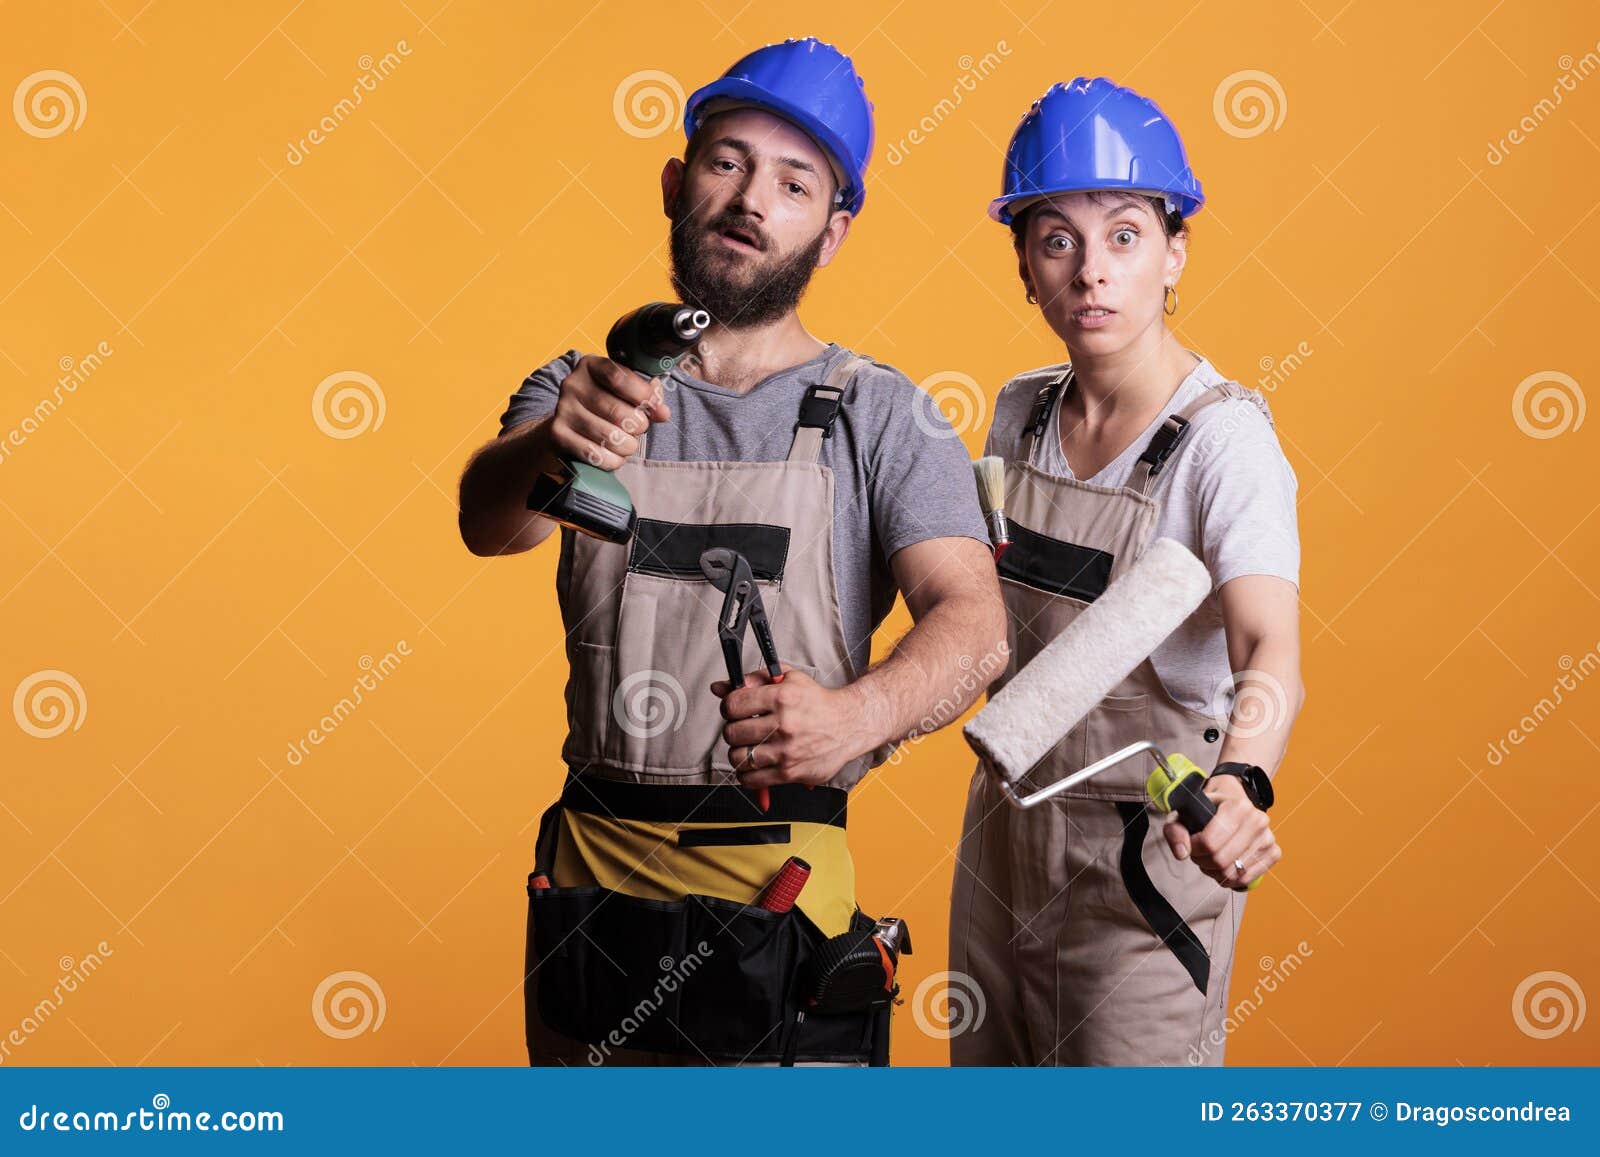 Professional Renovators Showing Construction Tools Stock Image Image Of Repairman Woman